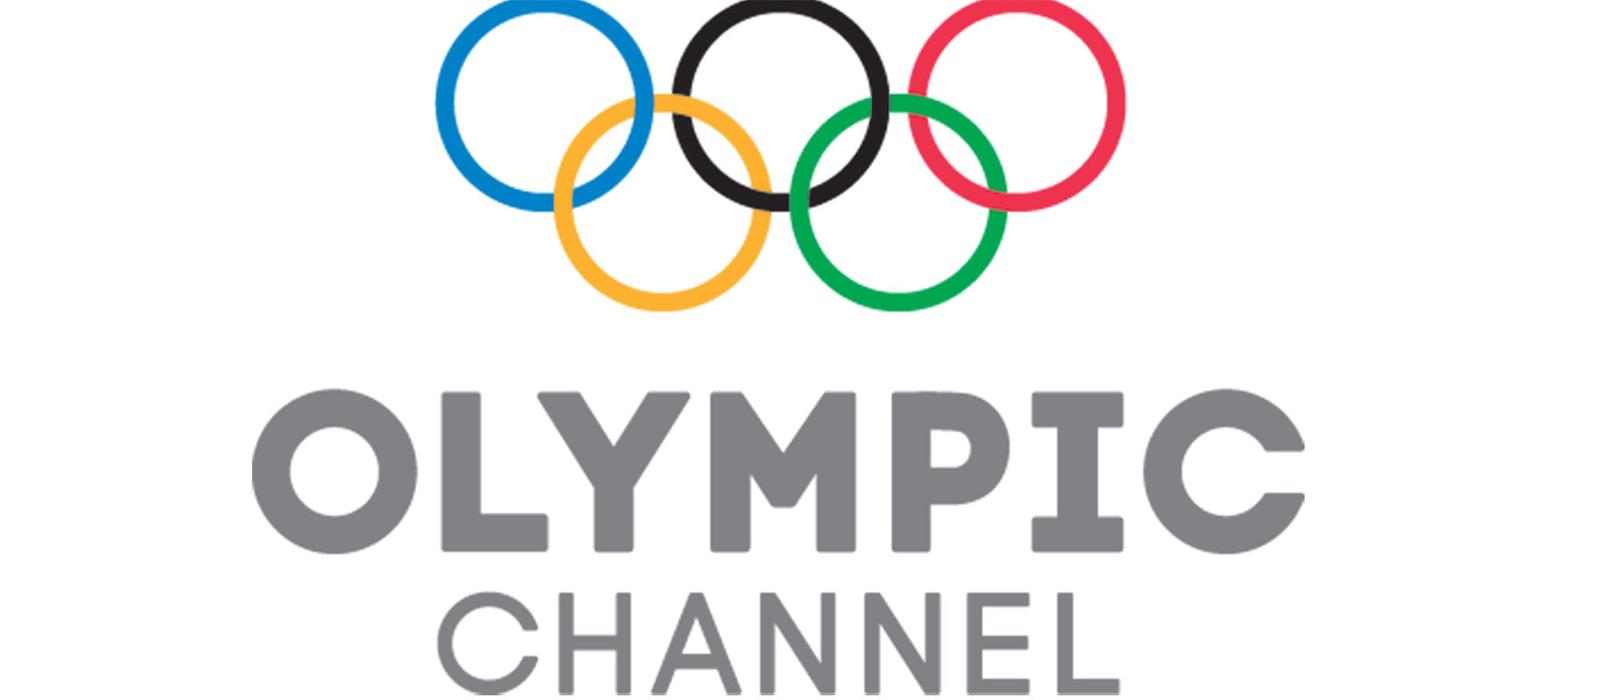 Olympic Channel logo